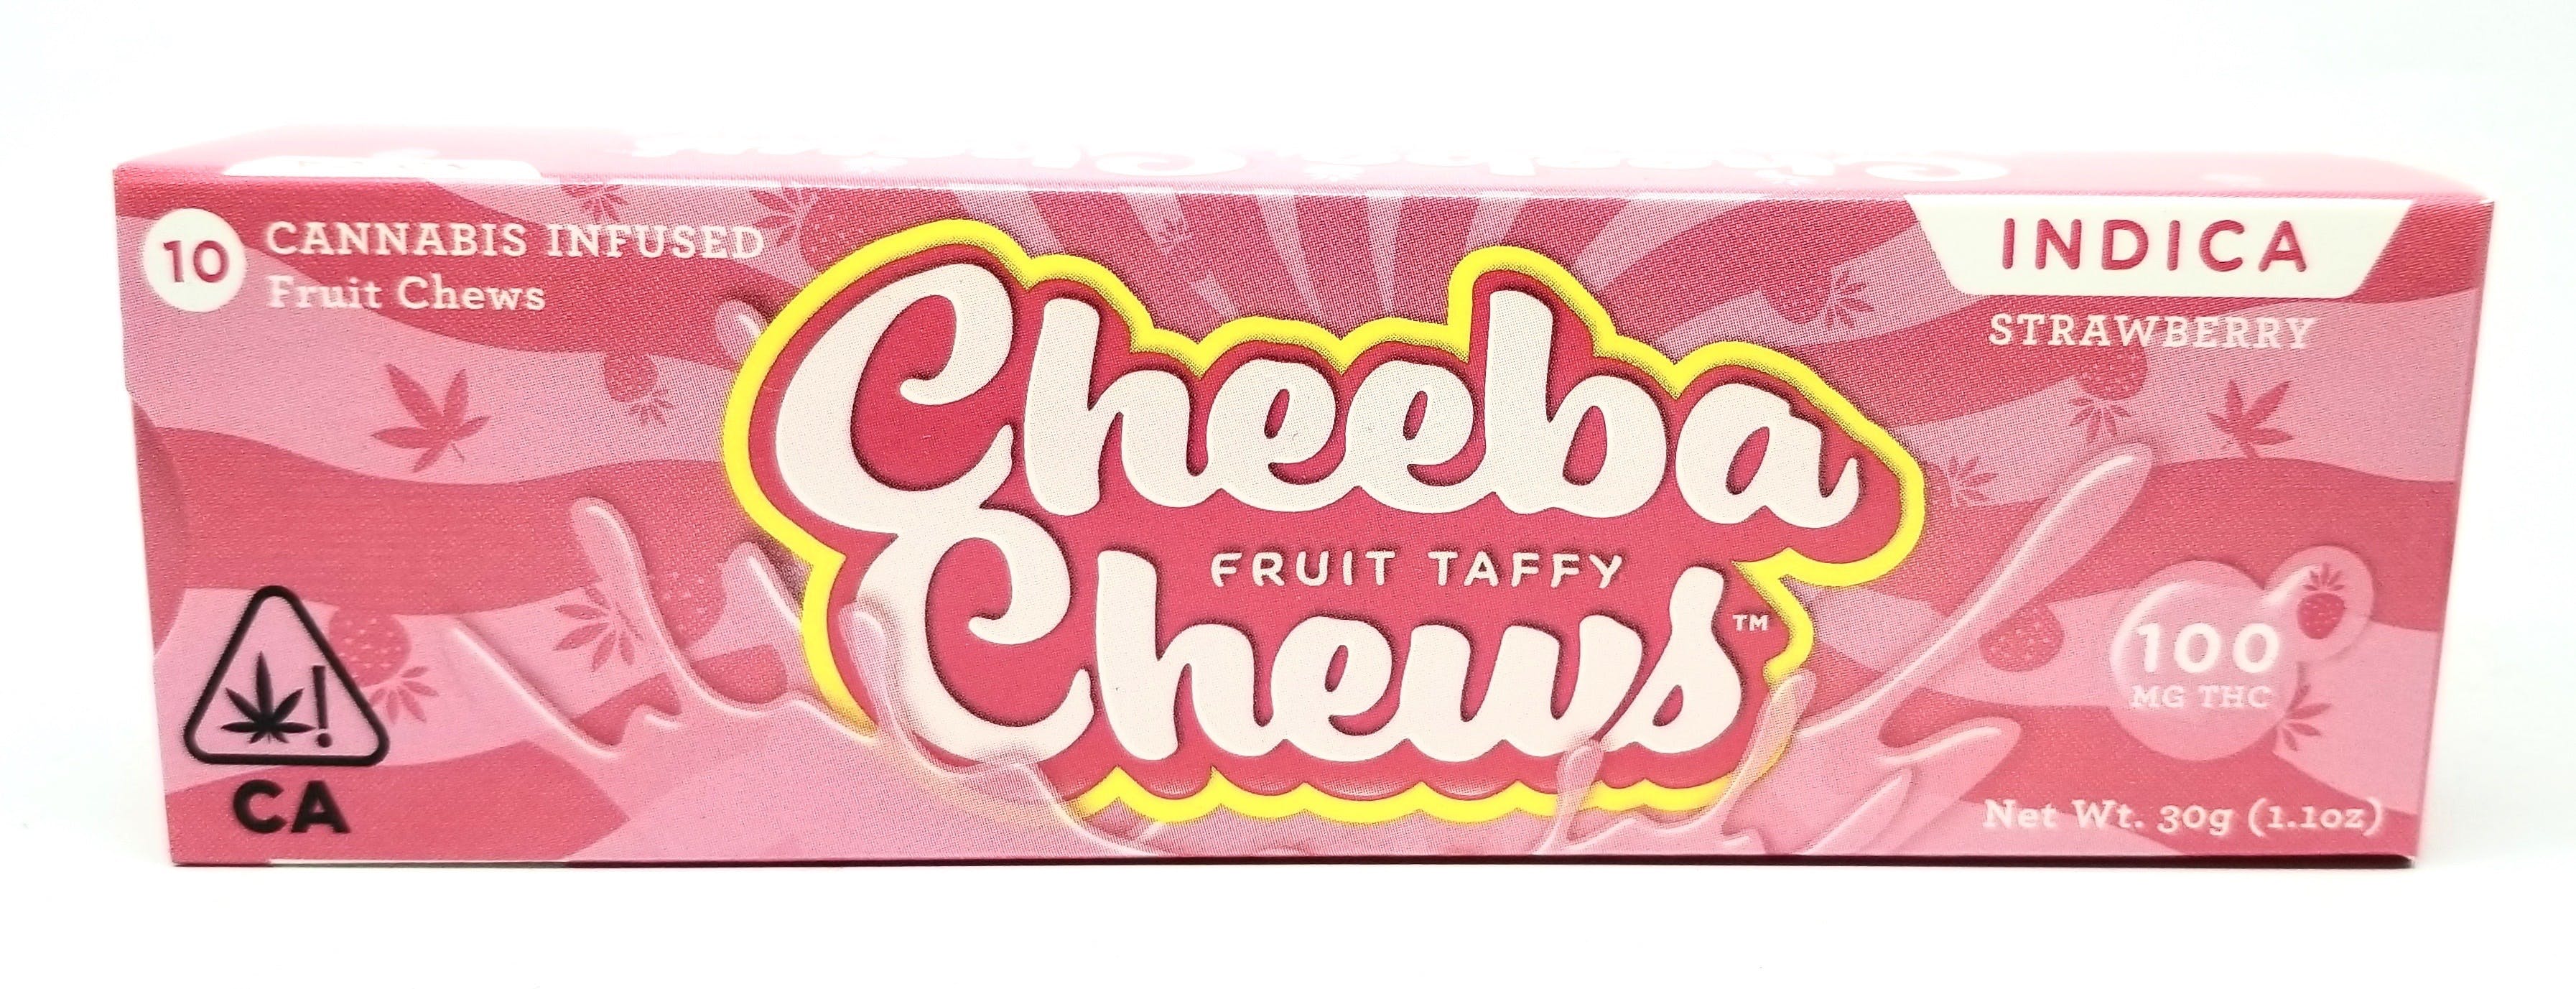 edible-strawberry-indica-chocolate-taffy-cheeba-chews